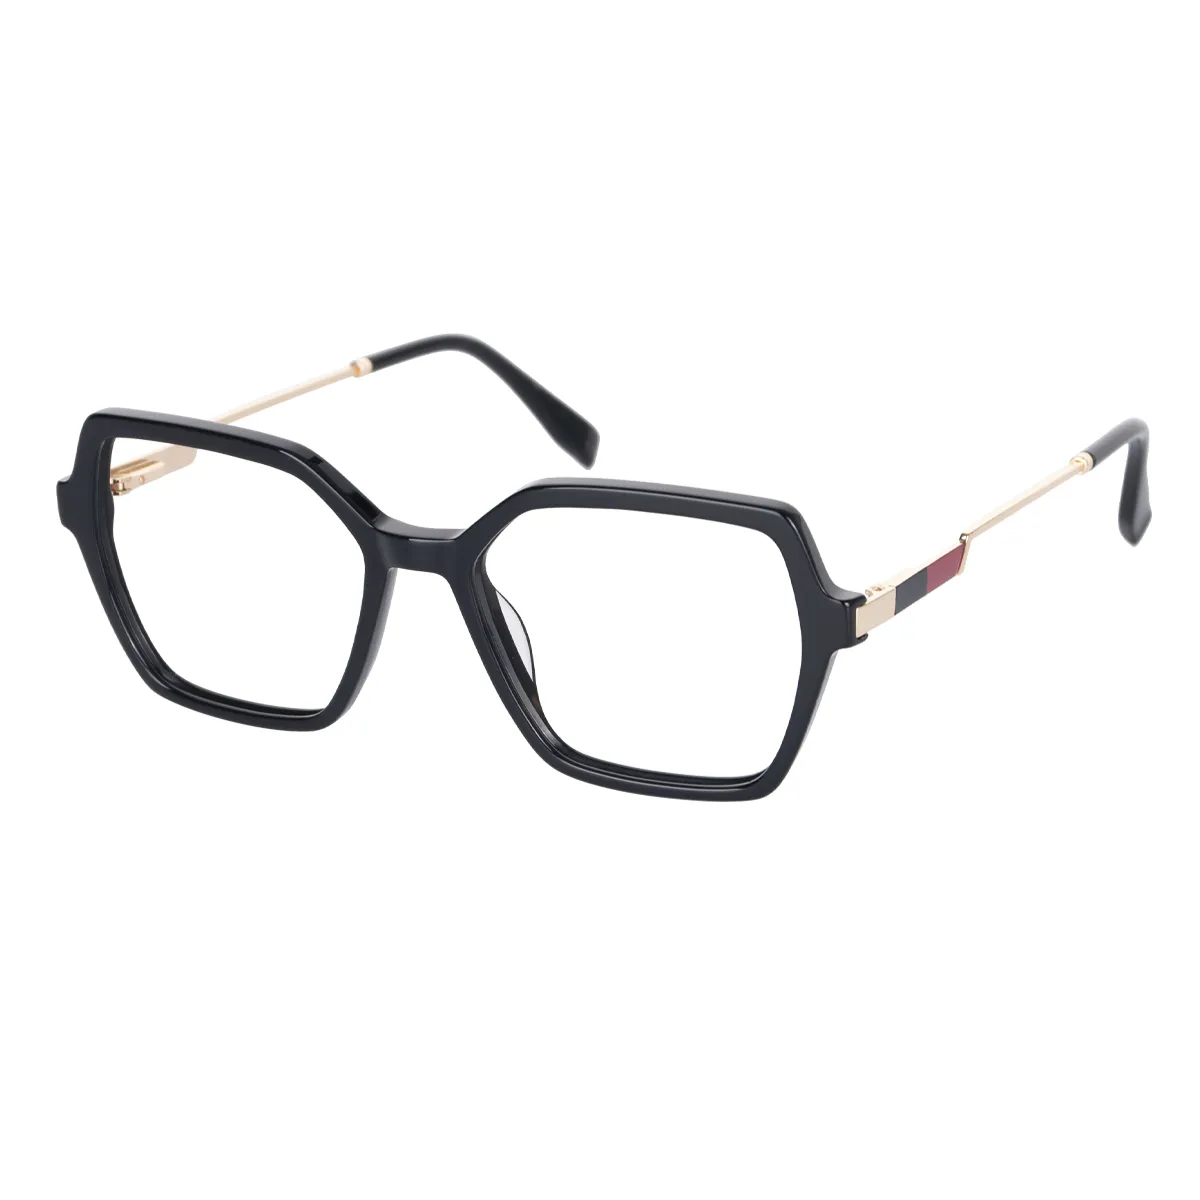 Natasha - Geometric Black Glasses for Women